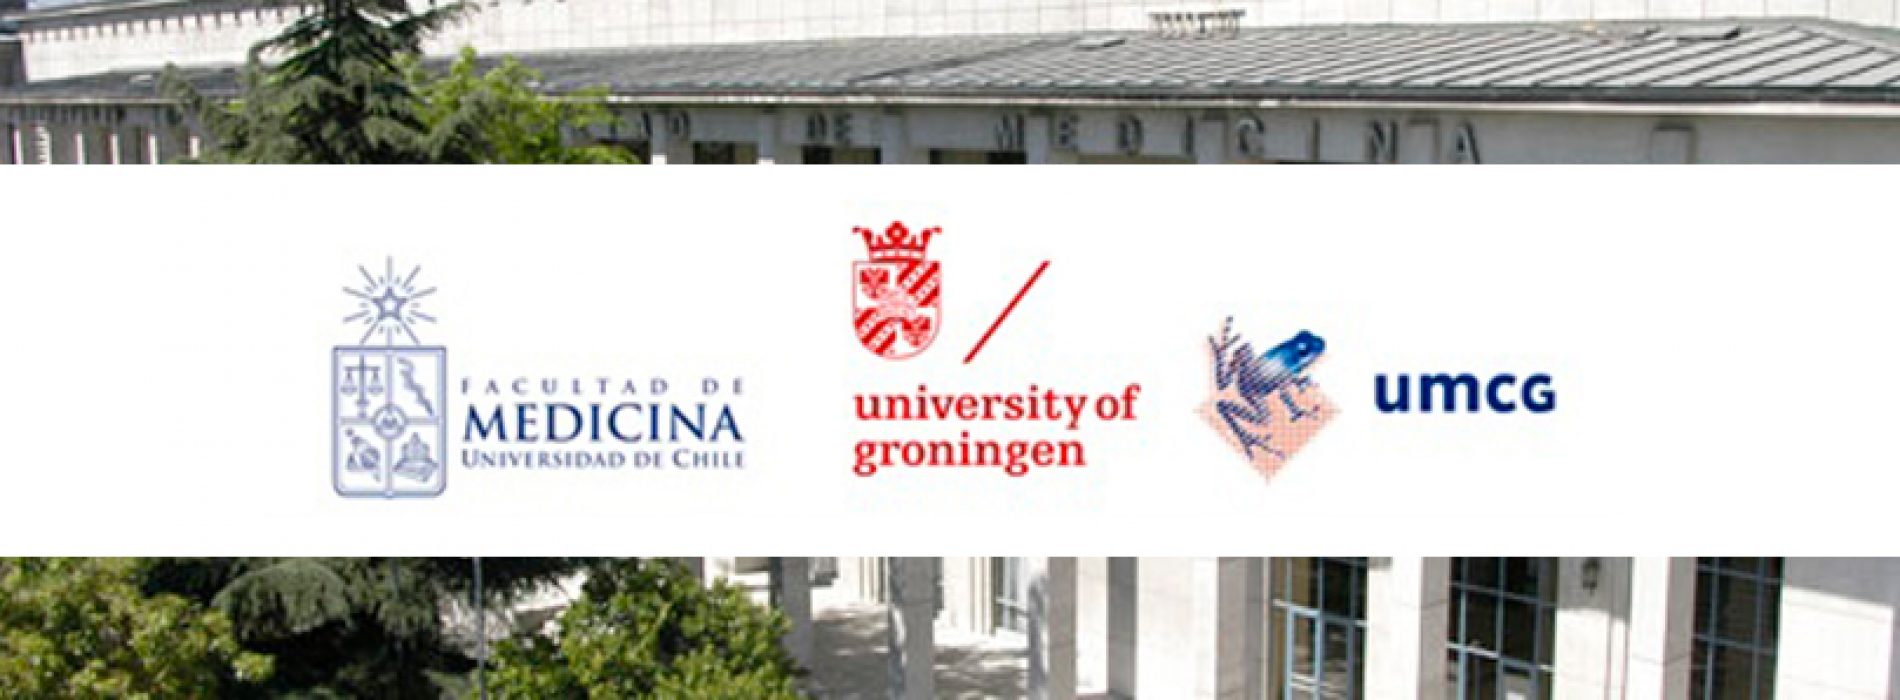 International Seminar July 4 – Faculty of Medicine, Universidad de Chile and University of Groningen